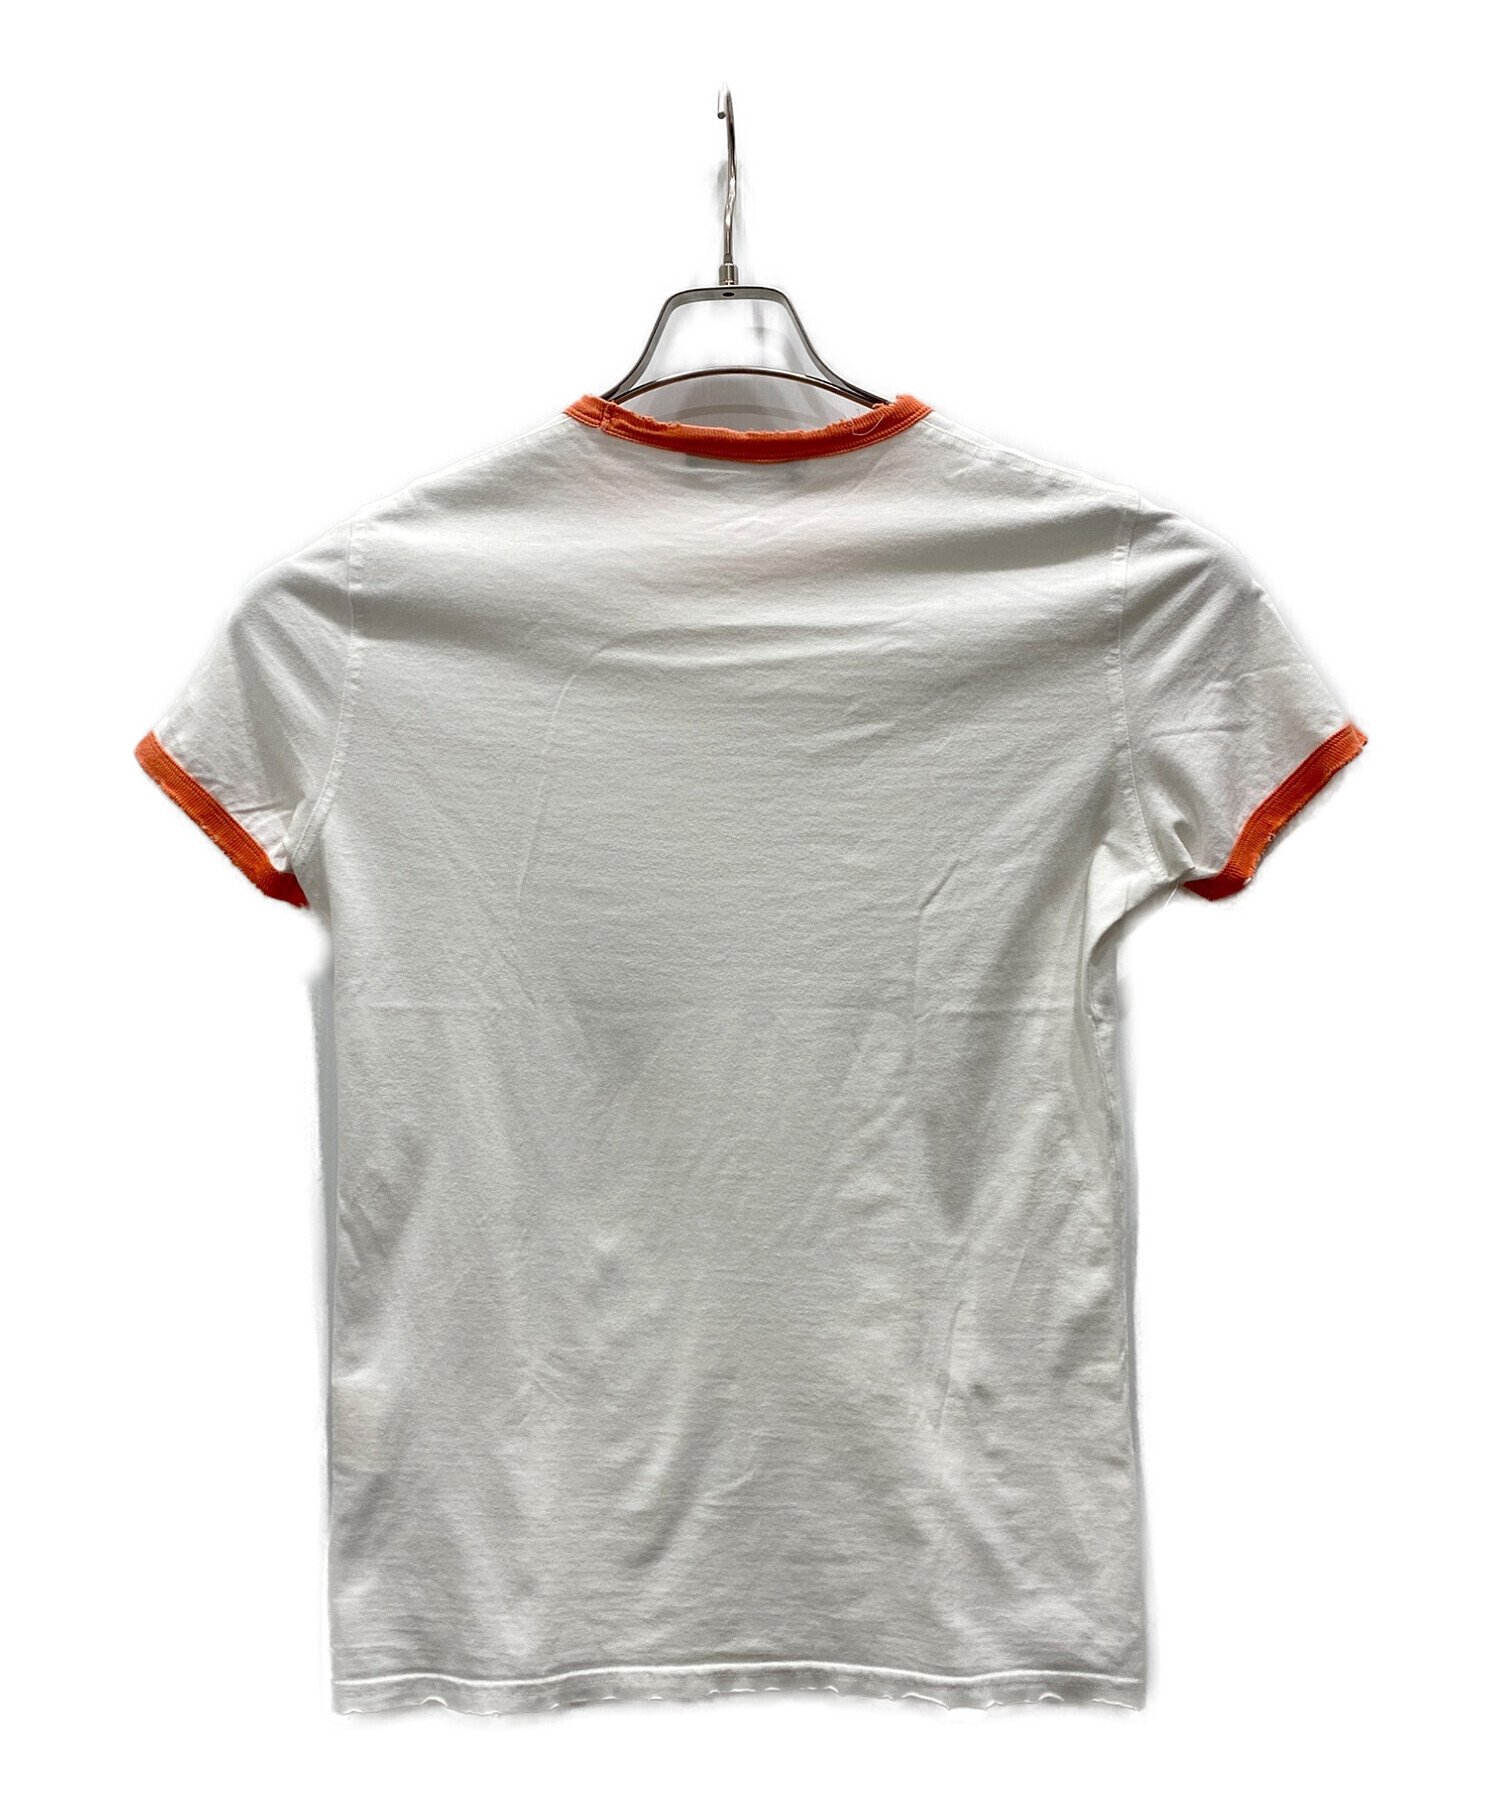 DSQUARED2 (ディースクエアード) 双子プリントリンガーダメージ加工Tシャツ ホワイト×オレンジ サイズ:S